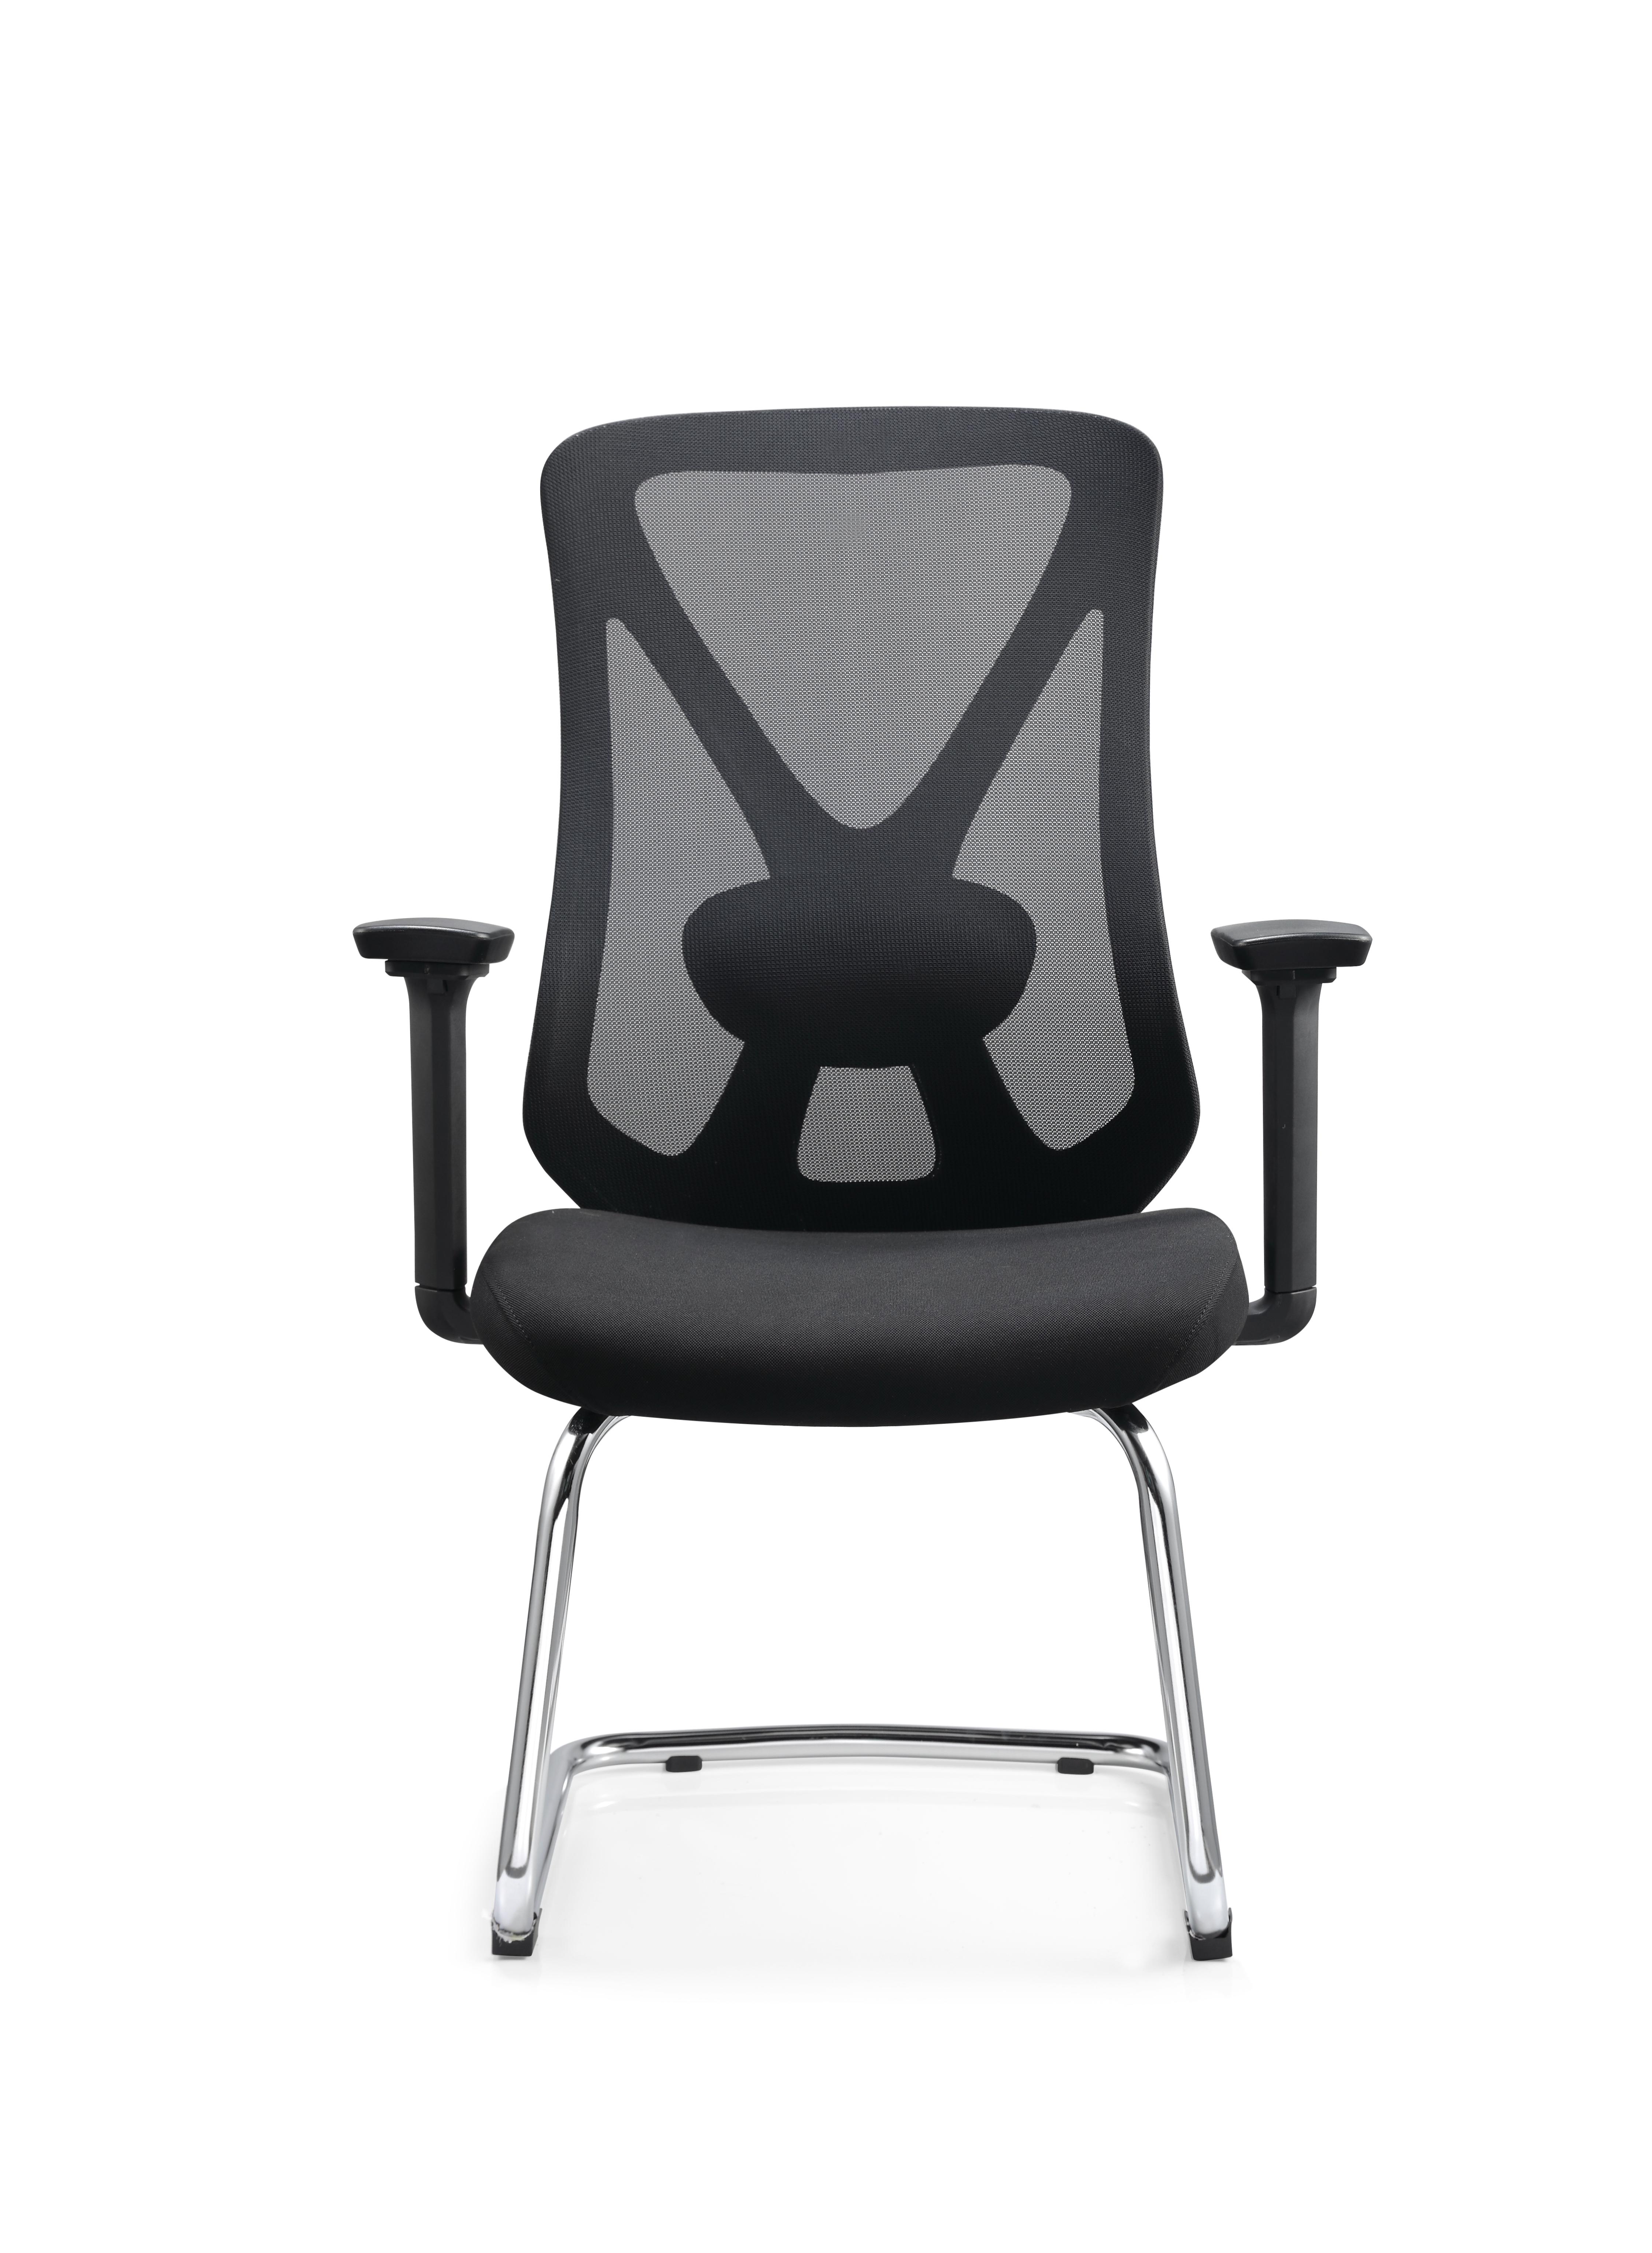 Newcity 629C الحديثة 3D مسند ذراع قابل للتعديل زائر شبكة كرسي الشركة المصنعة للمبيعات المباشرة مكتب زائر كرسي عالية الجودة زائر كرسي تنفيذي زائر كرسي المورد فوشان الصين